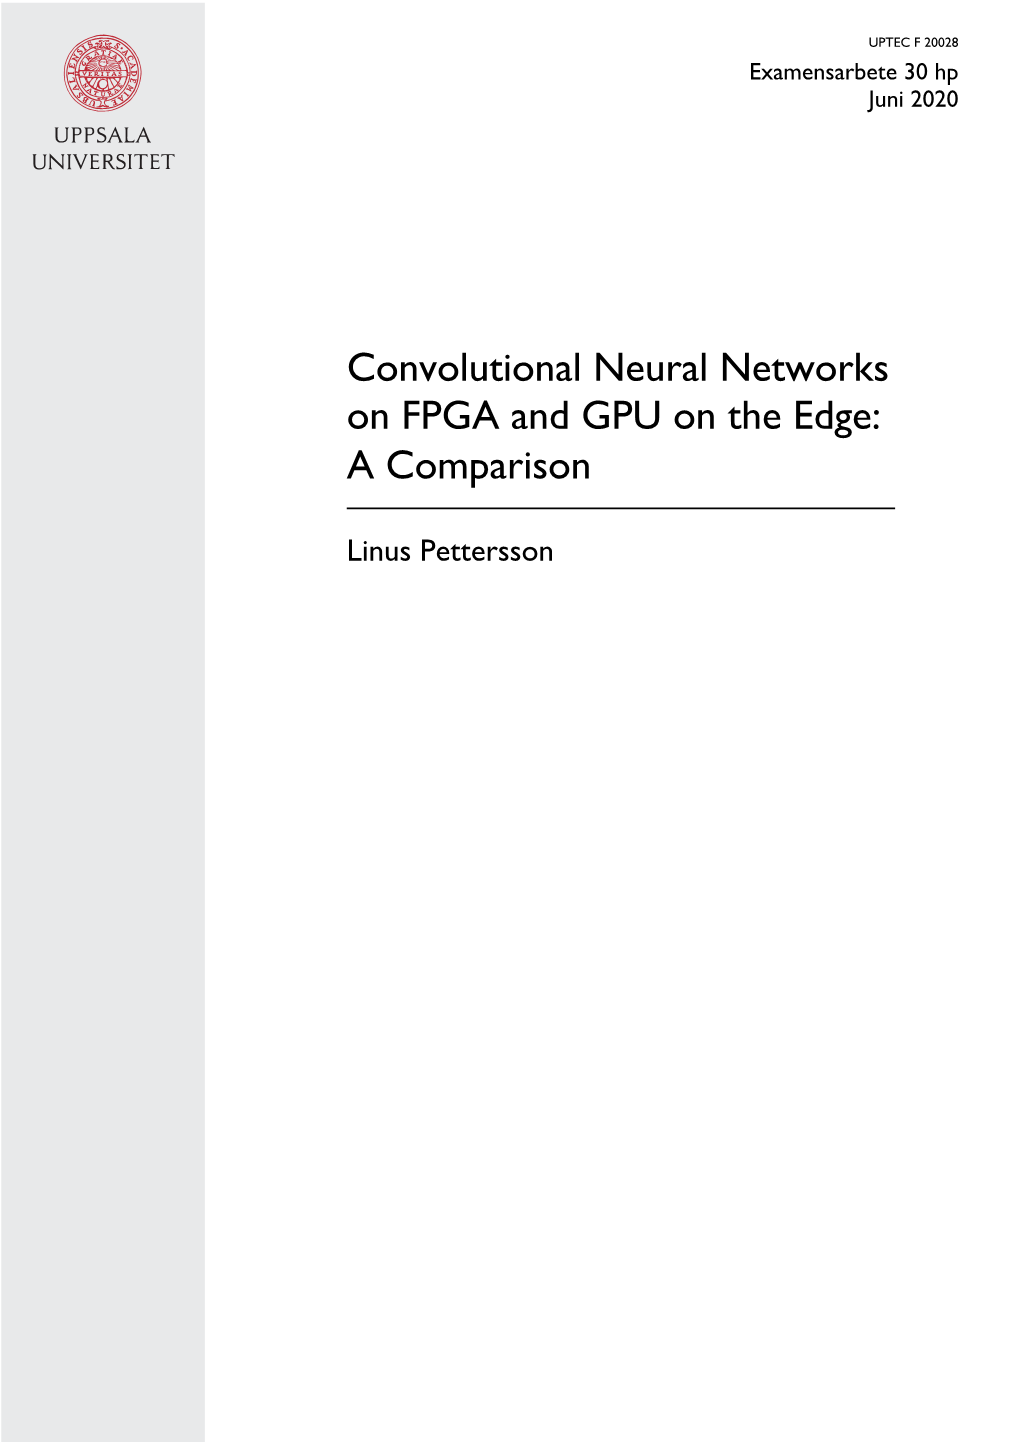 Convolutional Neural Networks on FPGA and GPU on the Edge: a Comparison